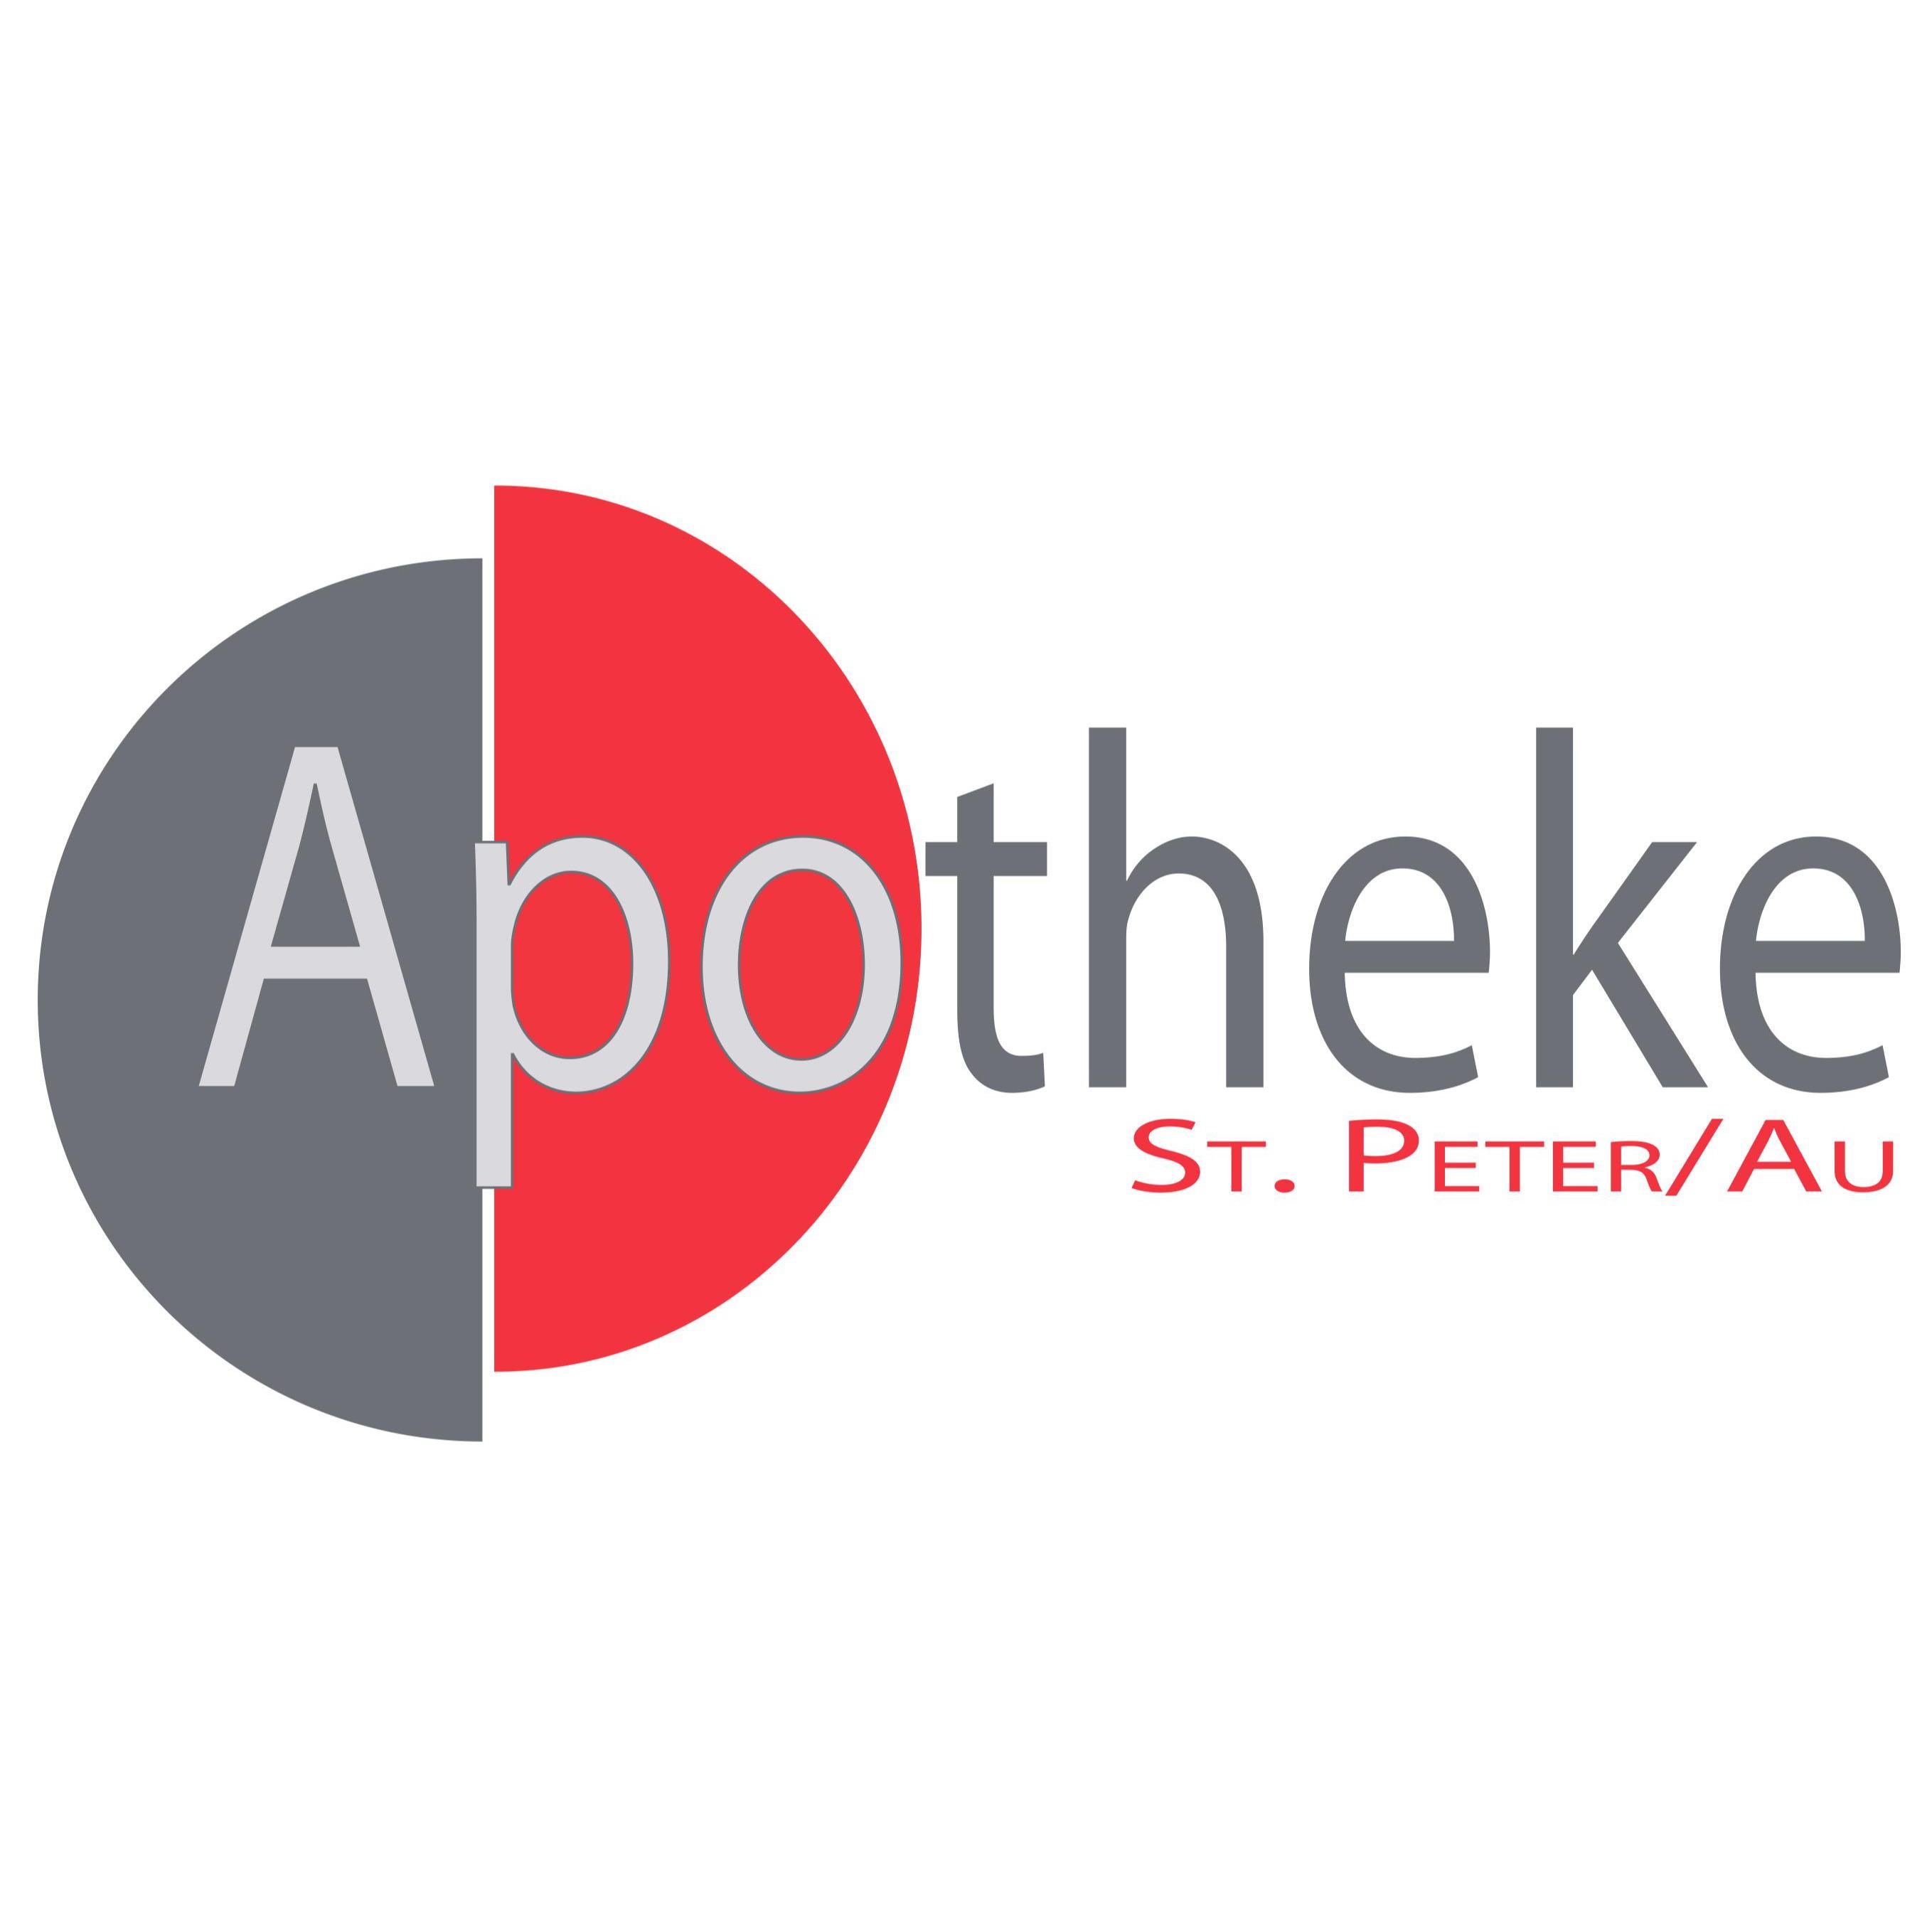 Apotheke St. Peter/Au Logo